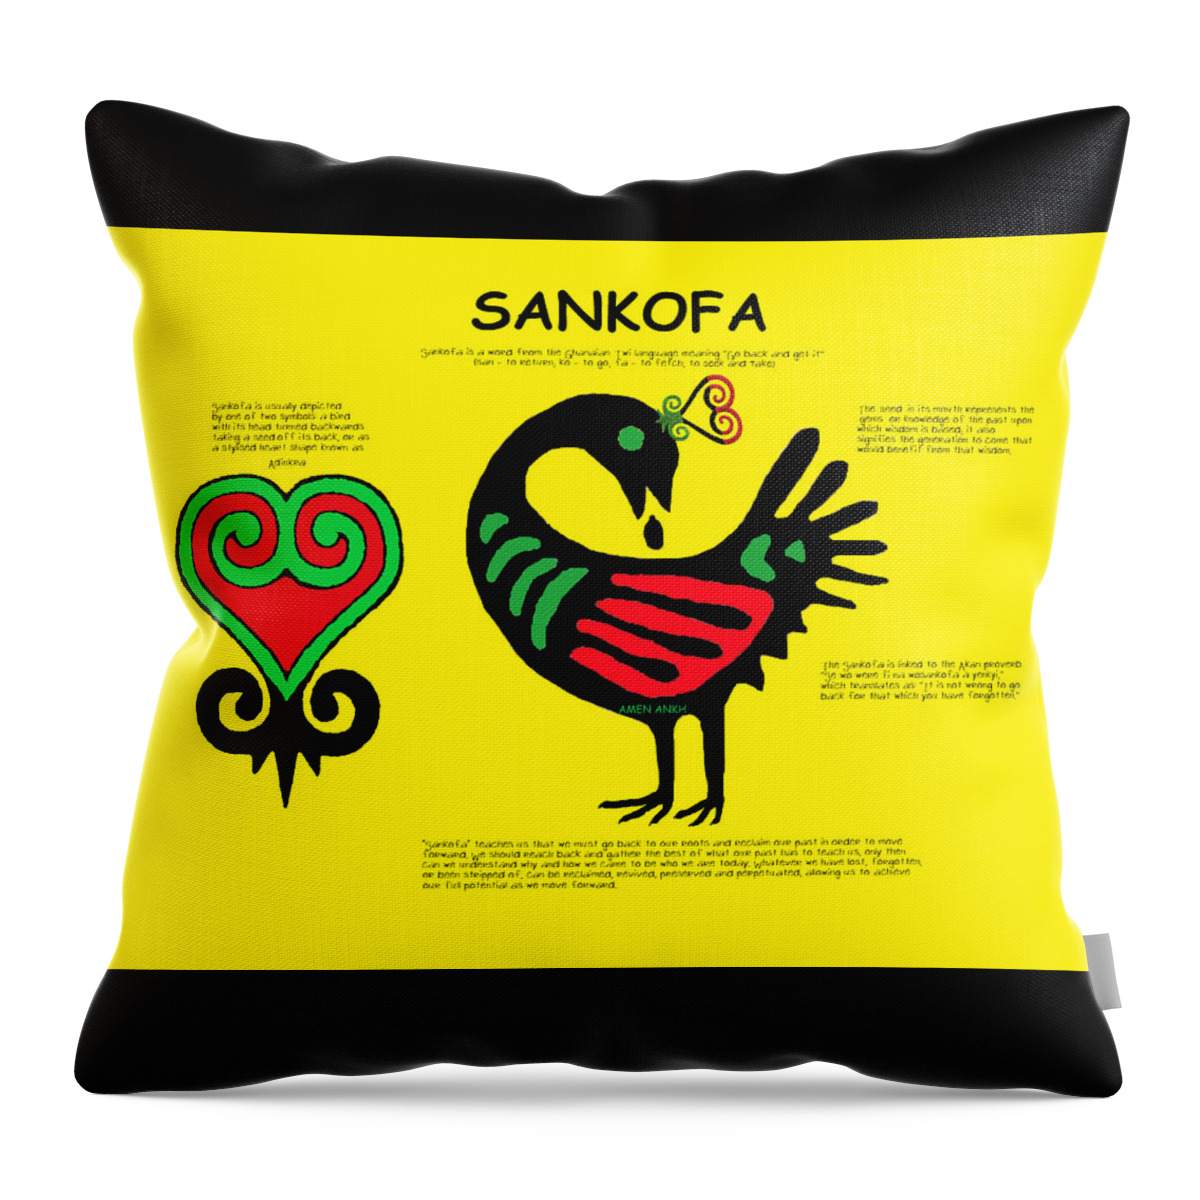 Sankofa Throw Pillow featuring the digital art Sankofa Knowledge by Adenike AmenRa